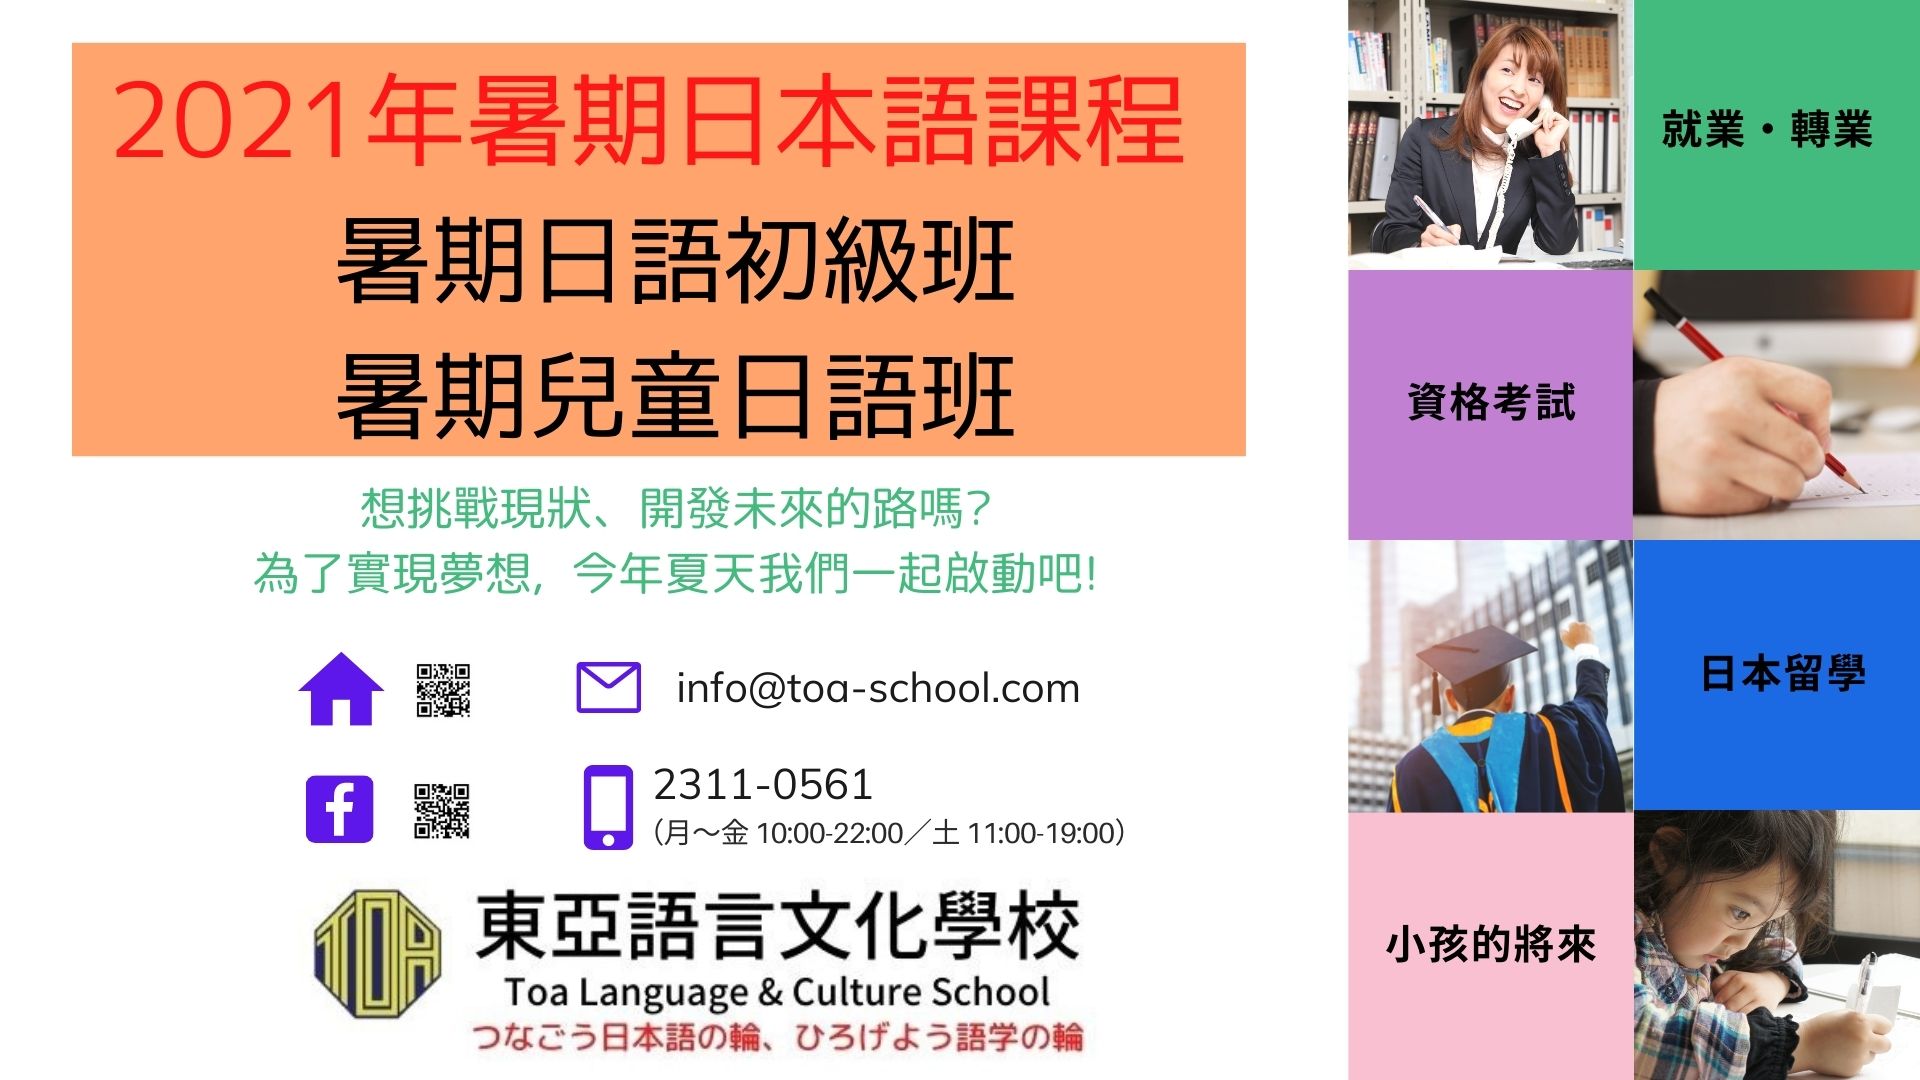 hongkong toa japanese school cantonese chinese summer courses 香港 東亞 日文 日本語 広東語 北京語 暑期課程